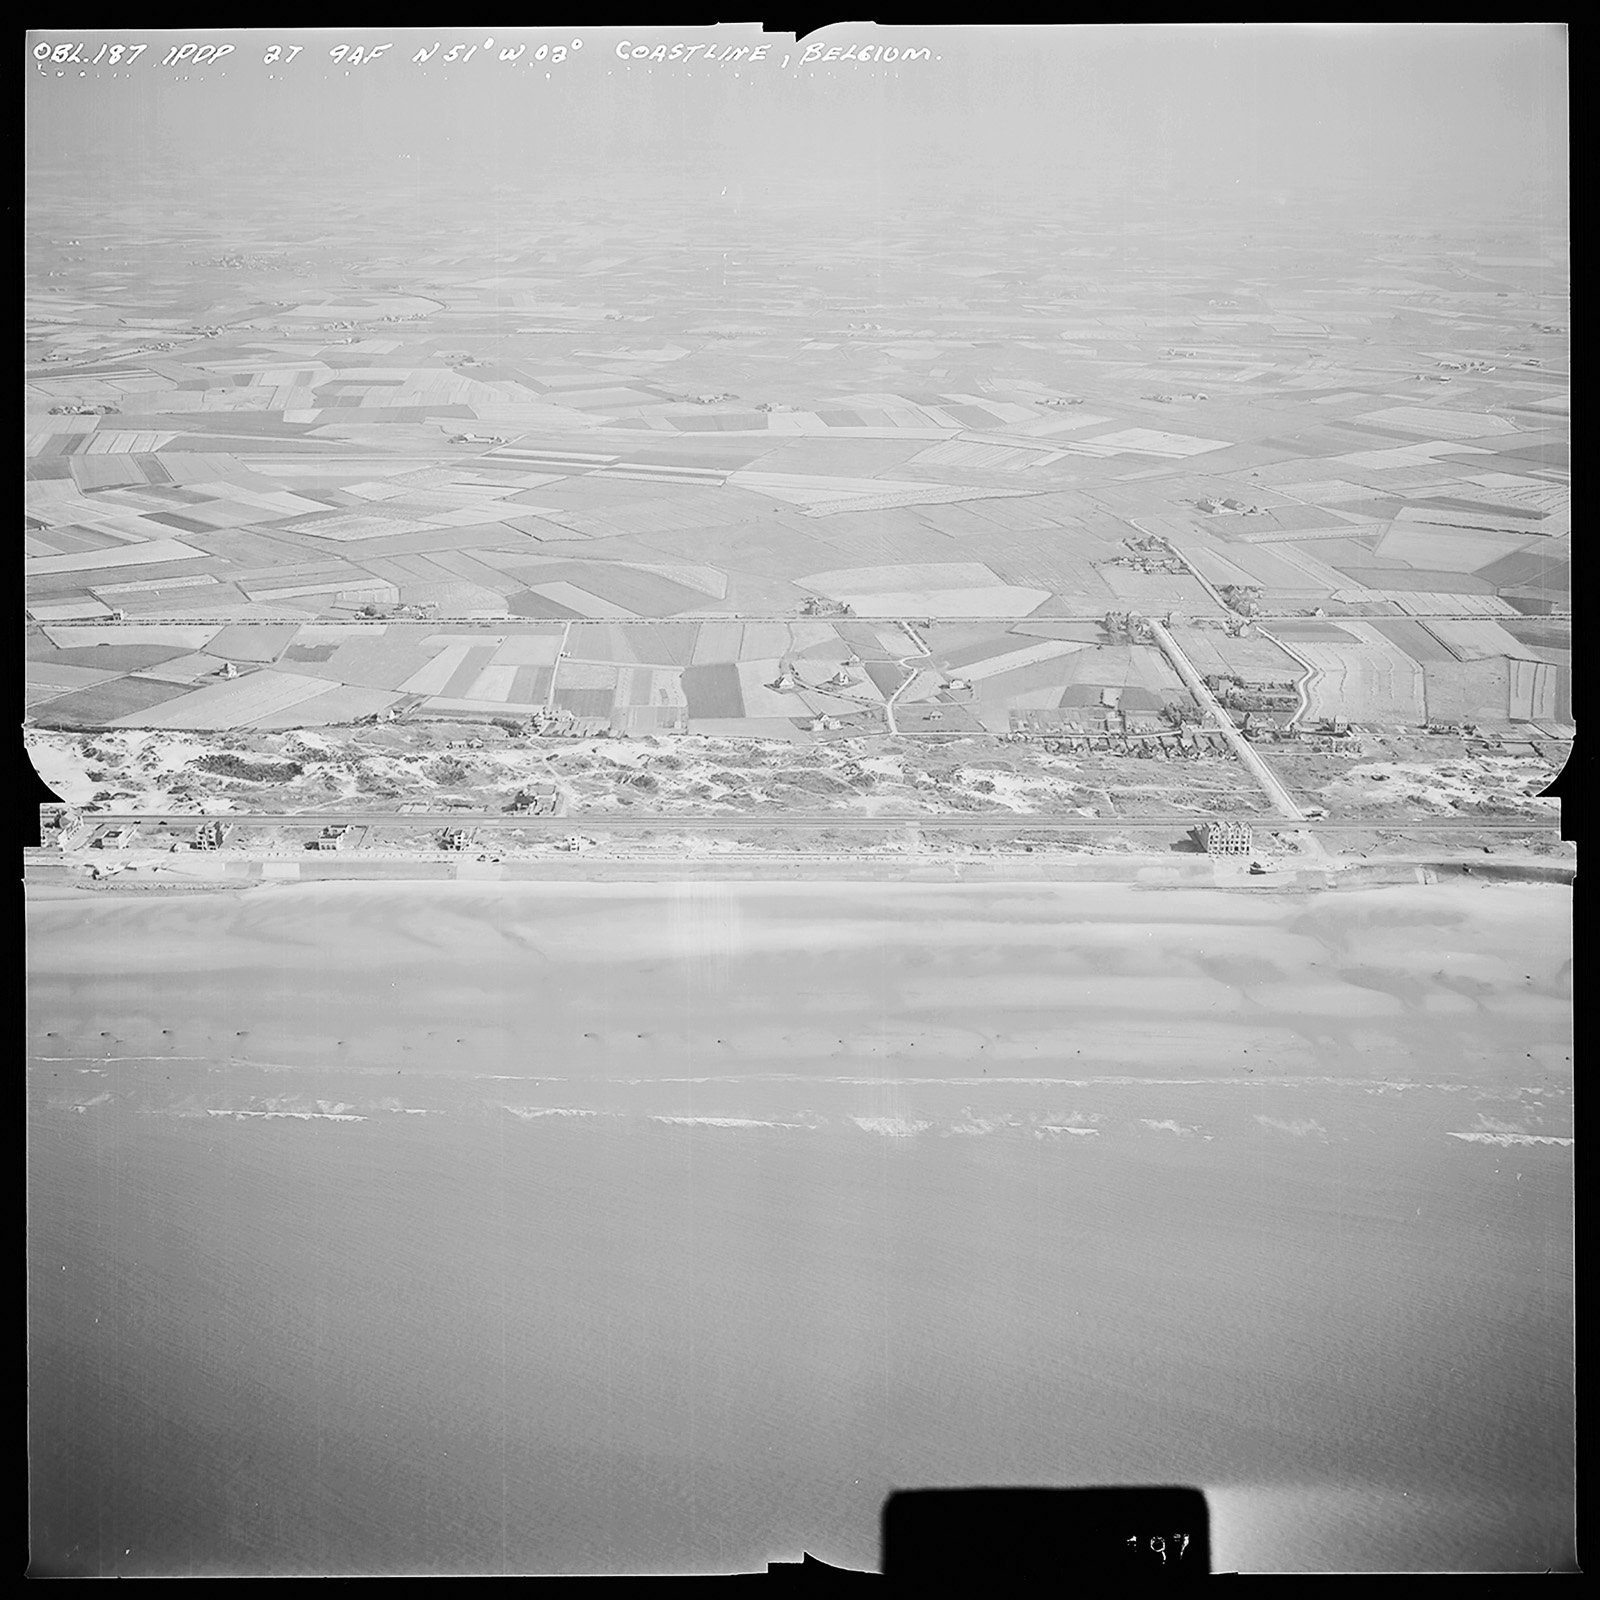 Atlantikwall - Mur de l'Atlantique - Atlantic Wall - 1945 - Belgien - Belgique - België - Belgium - Luftbild - Luftaufnahme - Luchtfoto - Vue aérienne